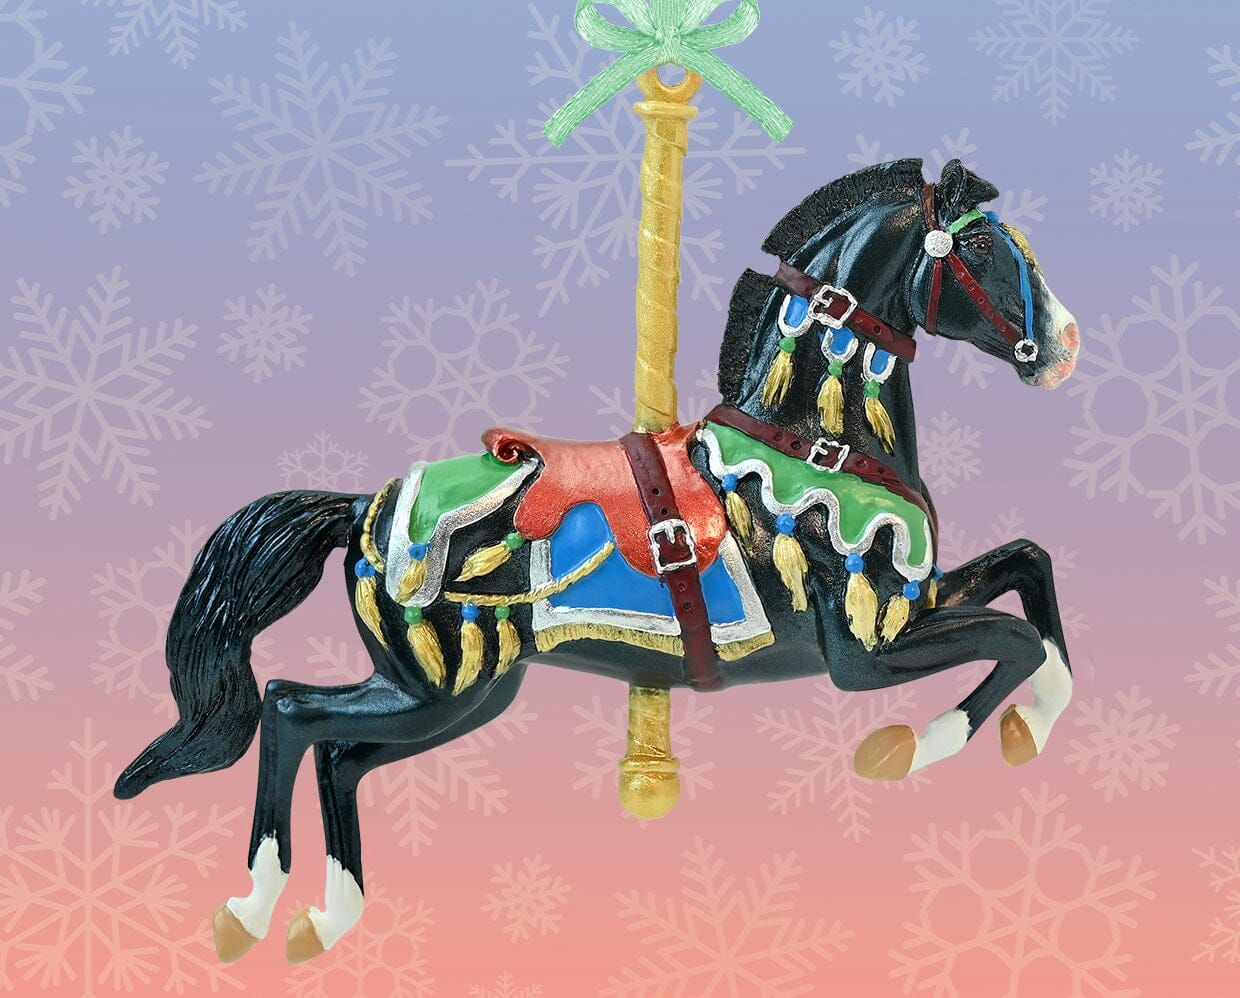 Breyer Charger Carousel Ornament